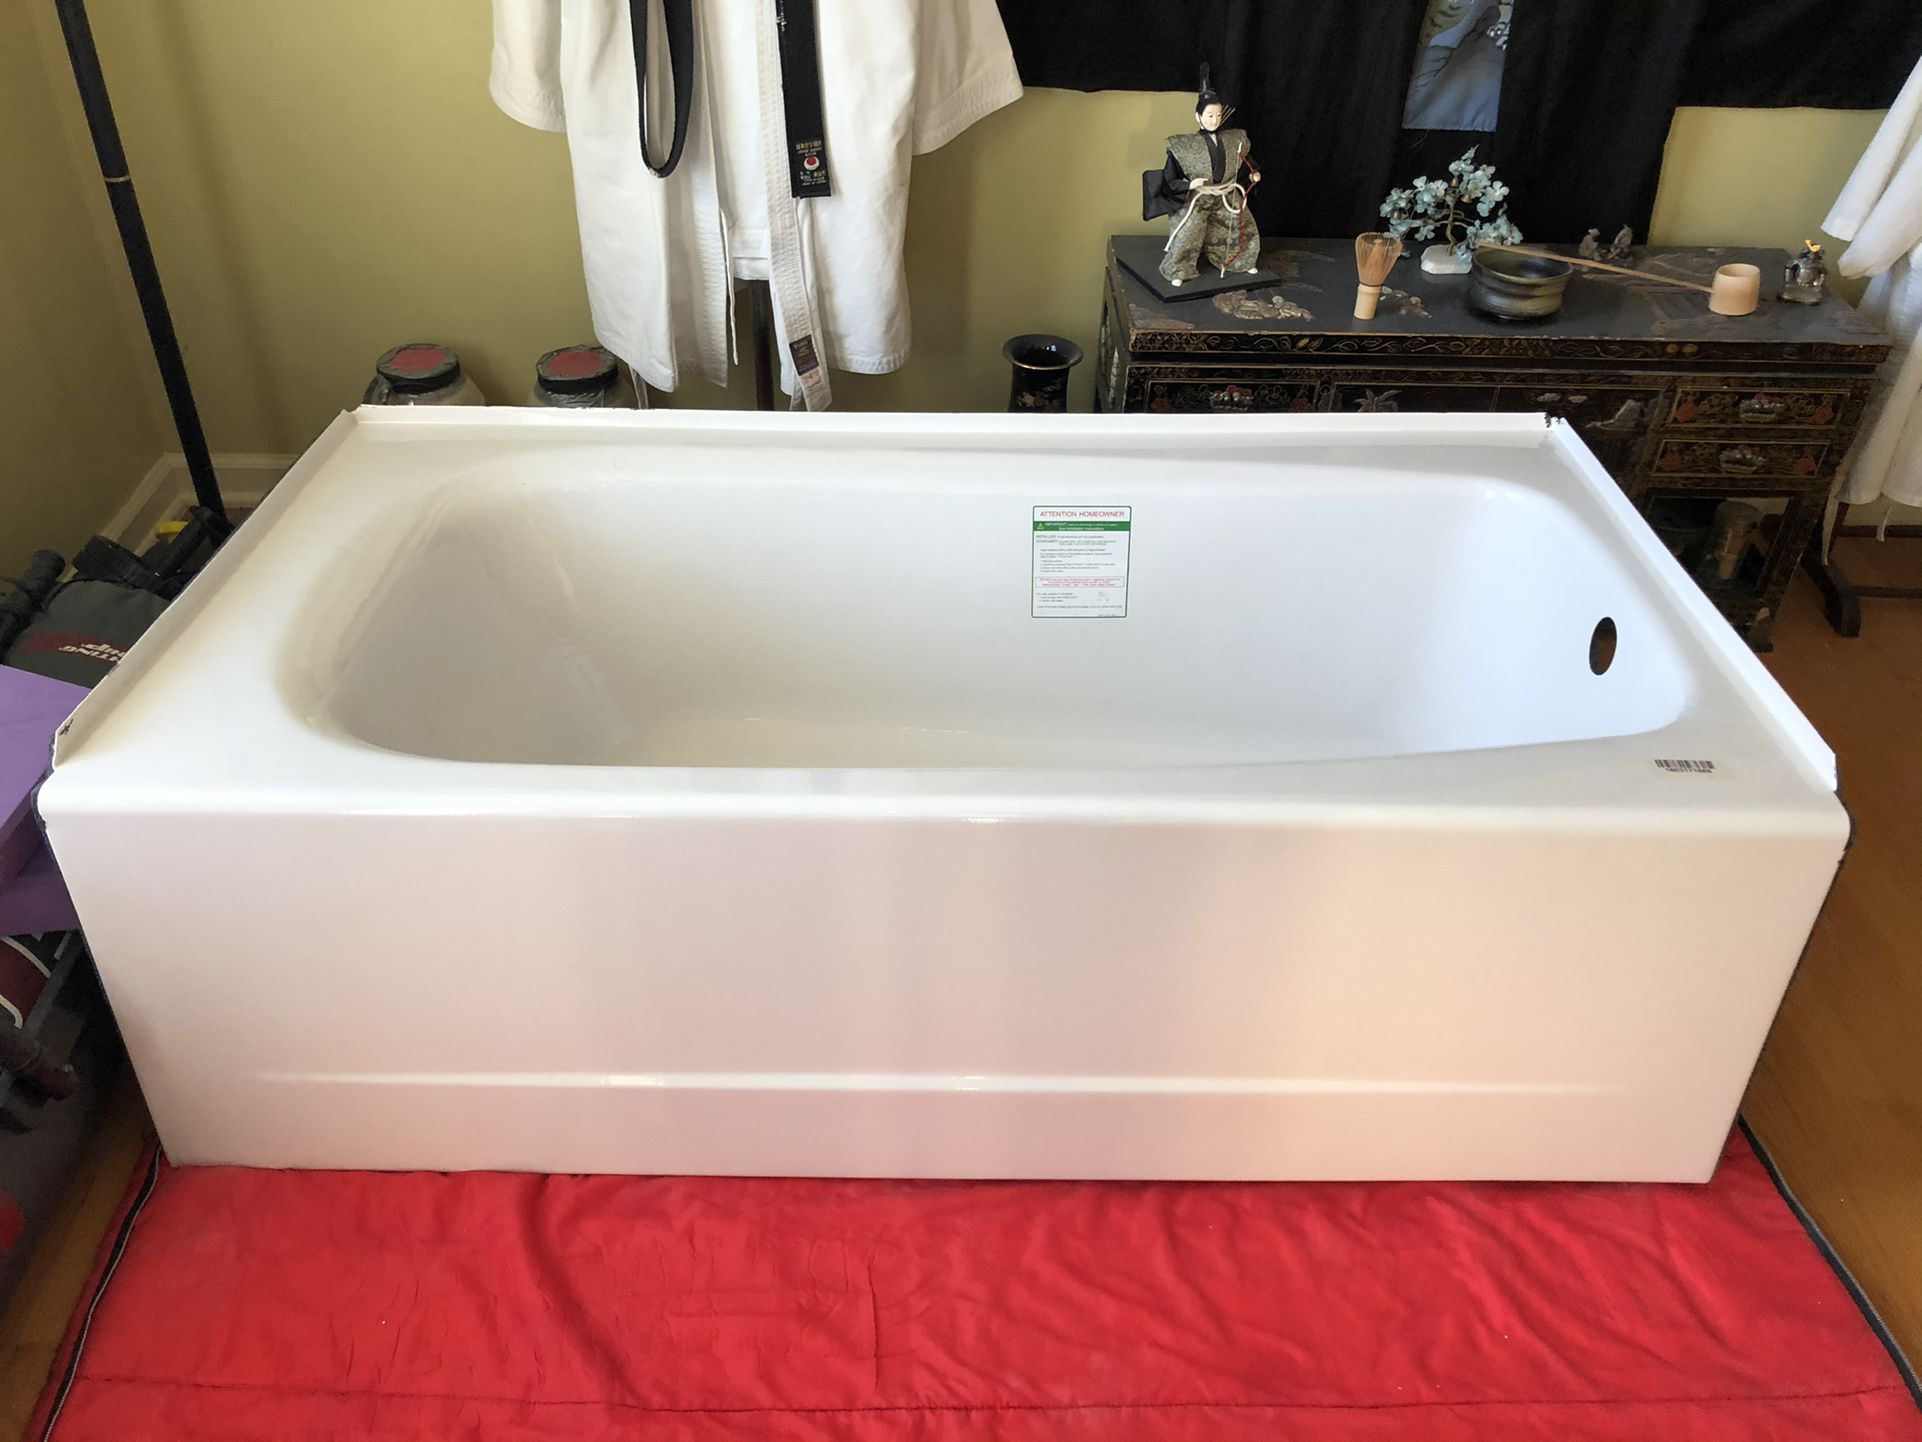 New American Standard 60” Right Hand Drain White Soaking Tub